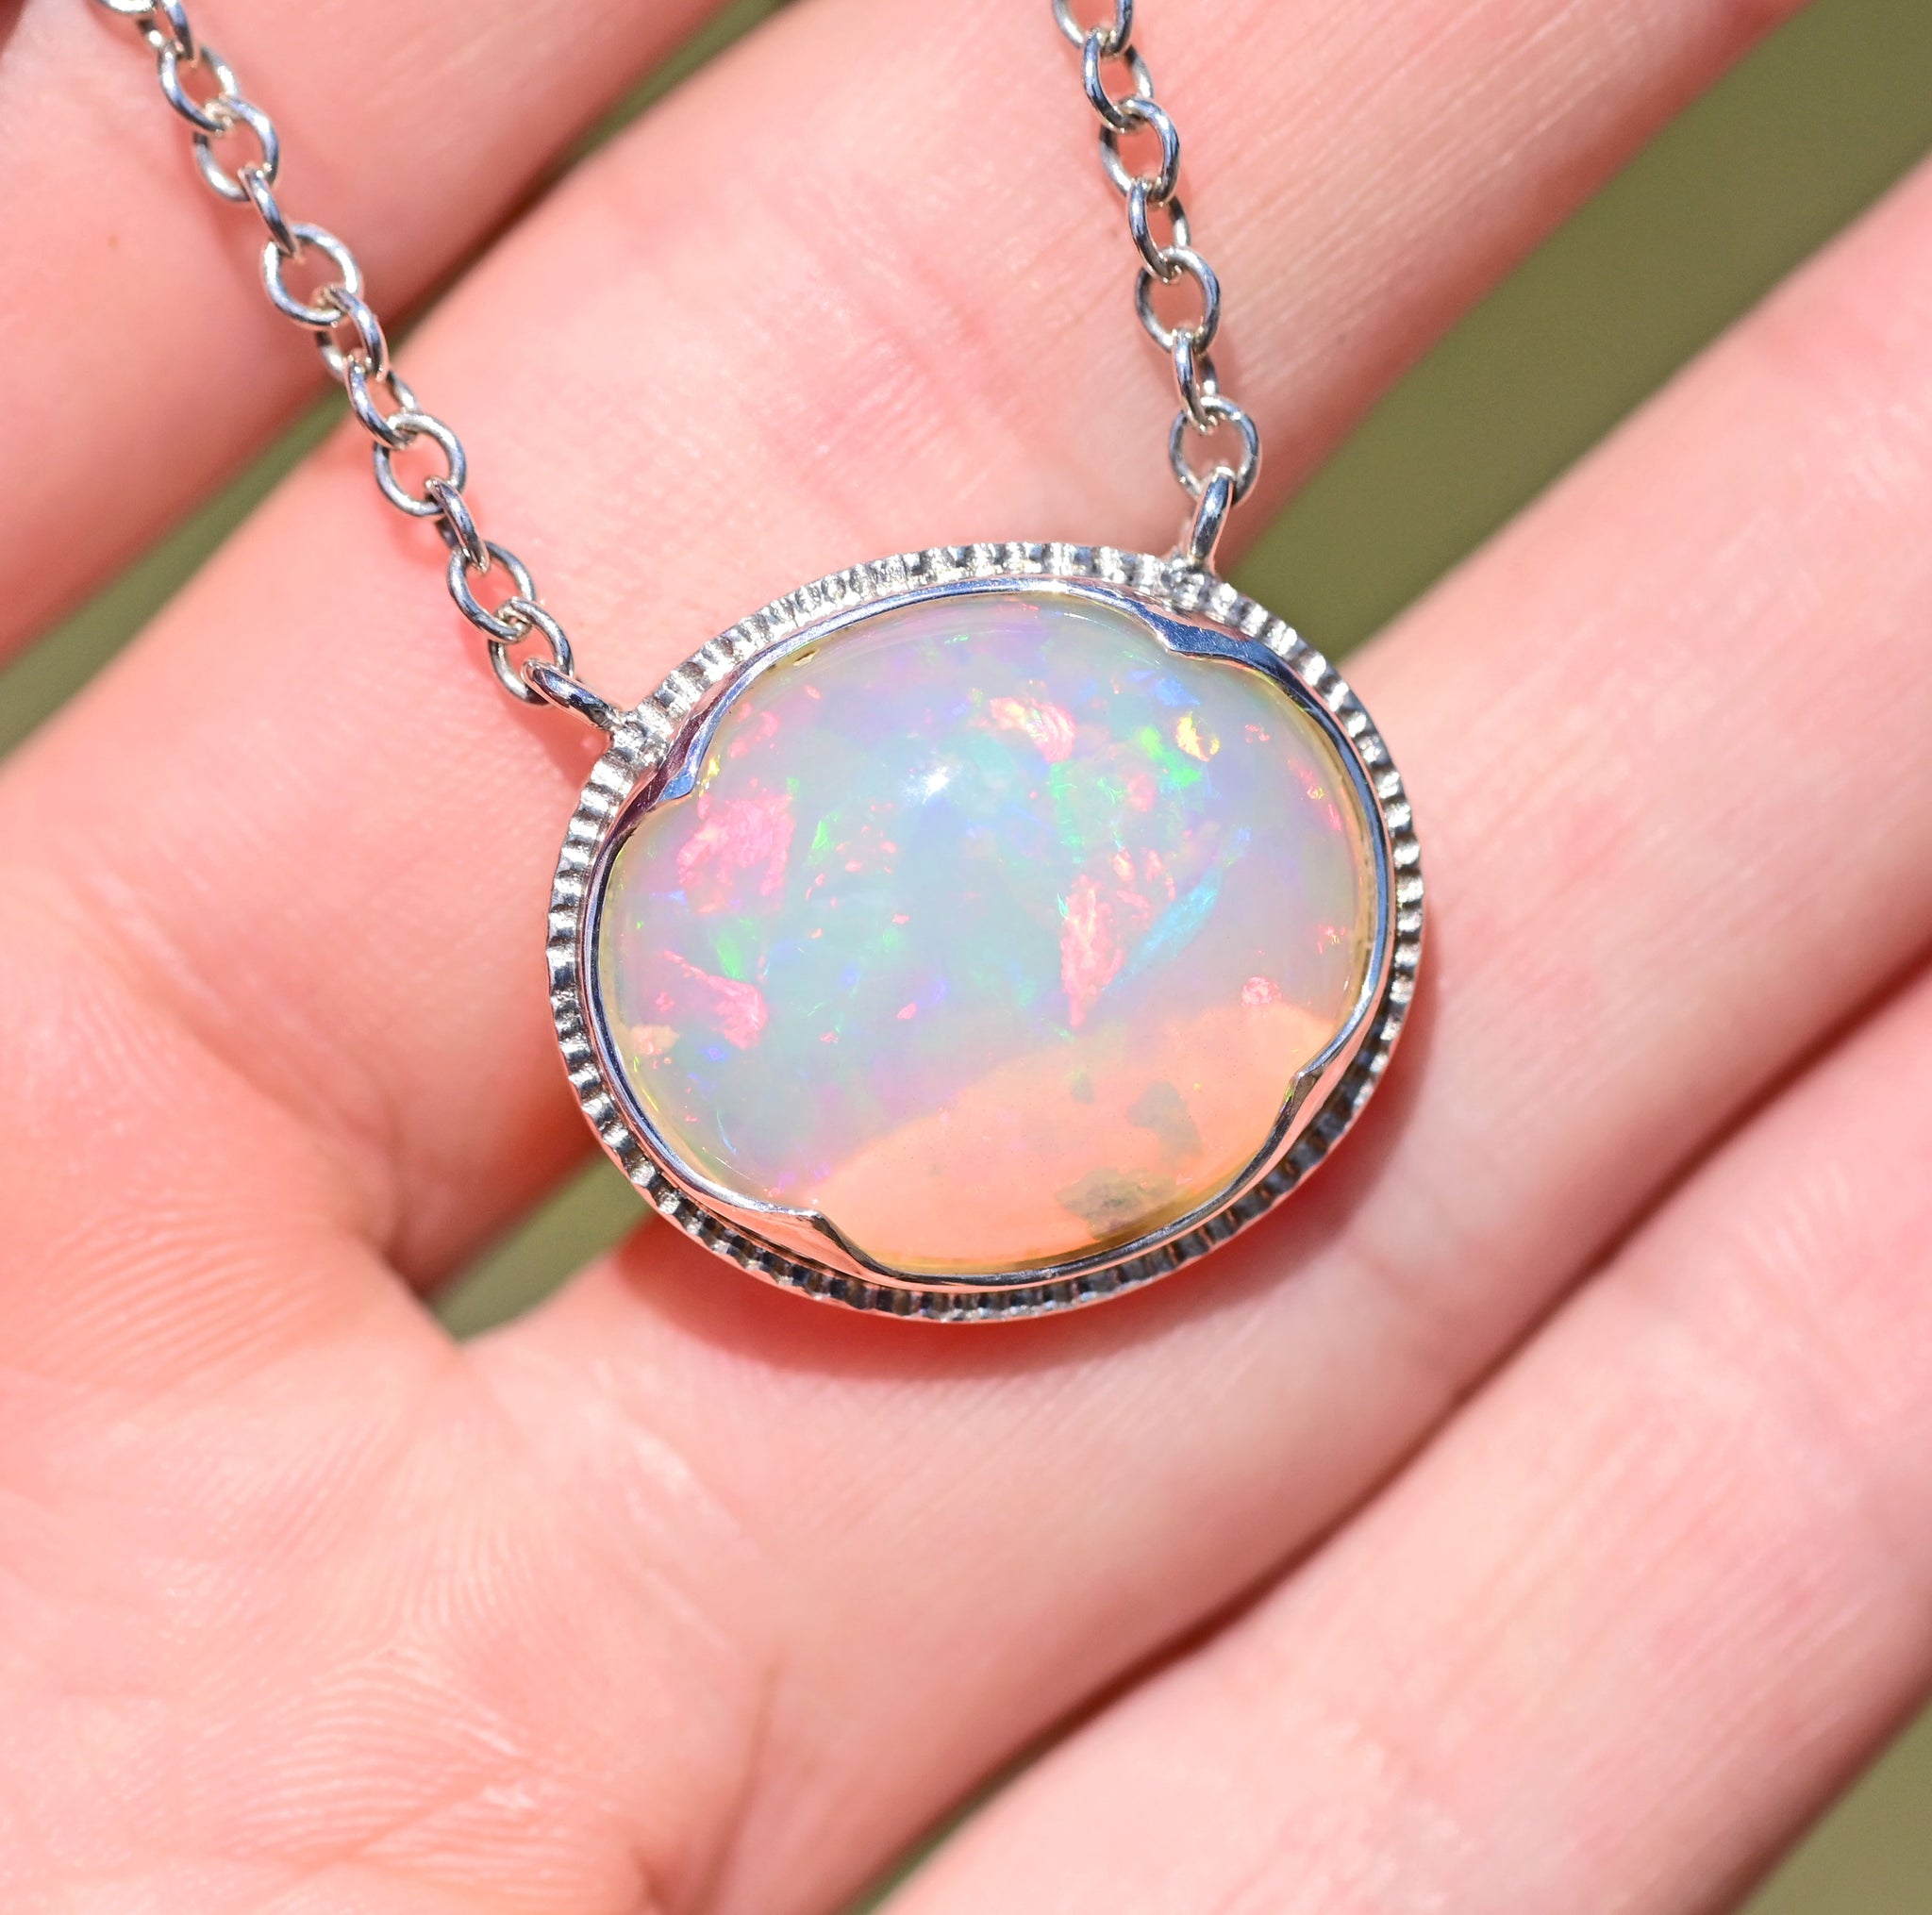 aqua ethiopian opal candy necklace - ela rae